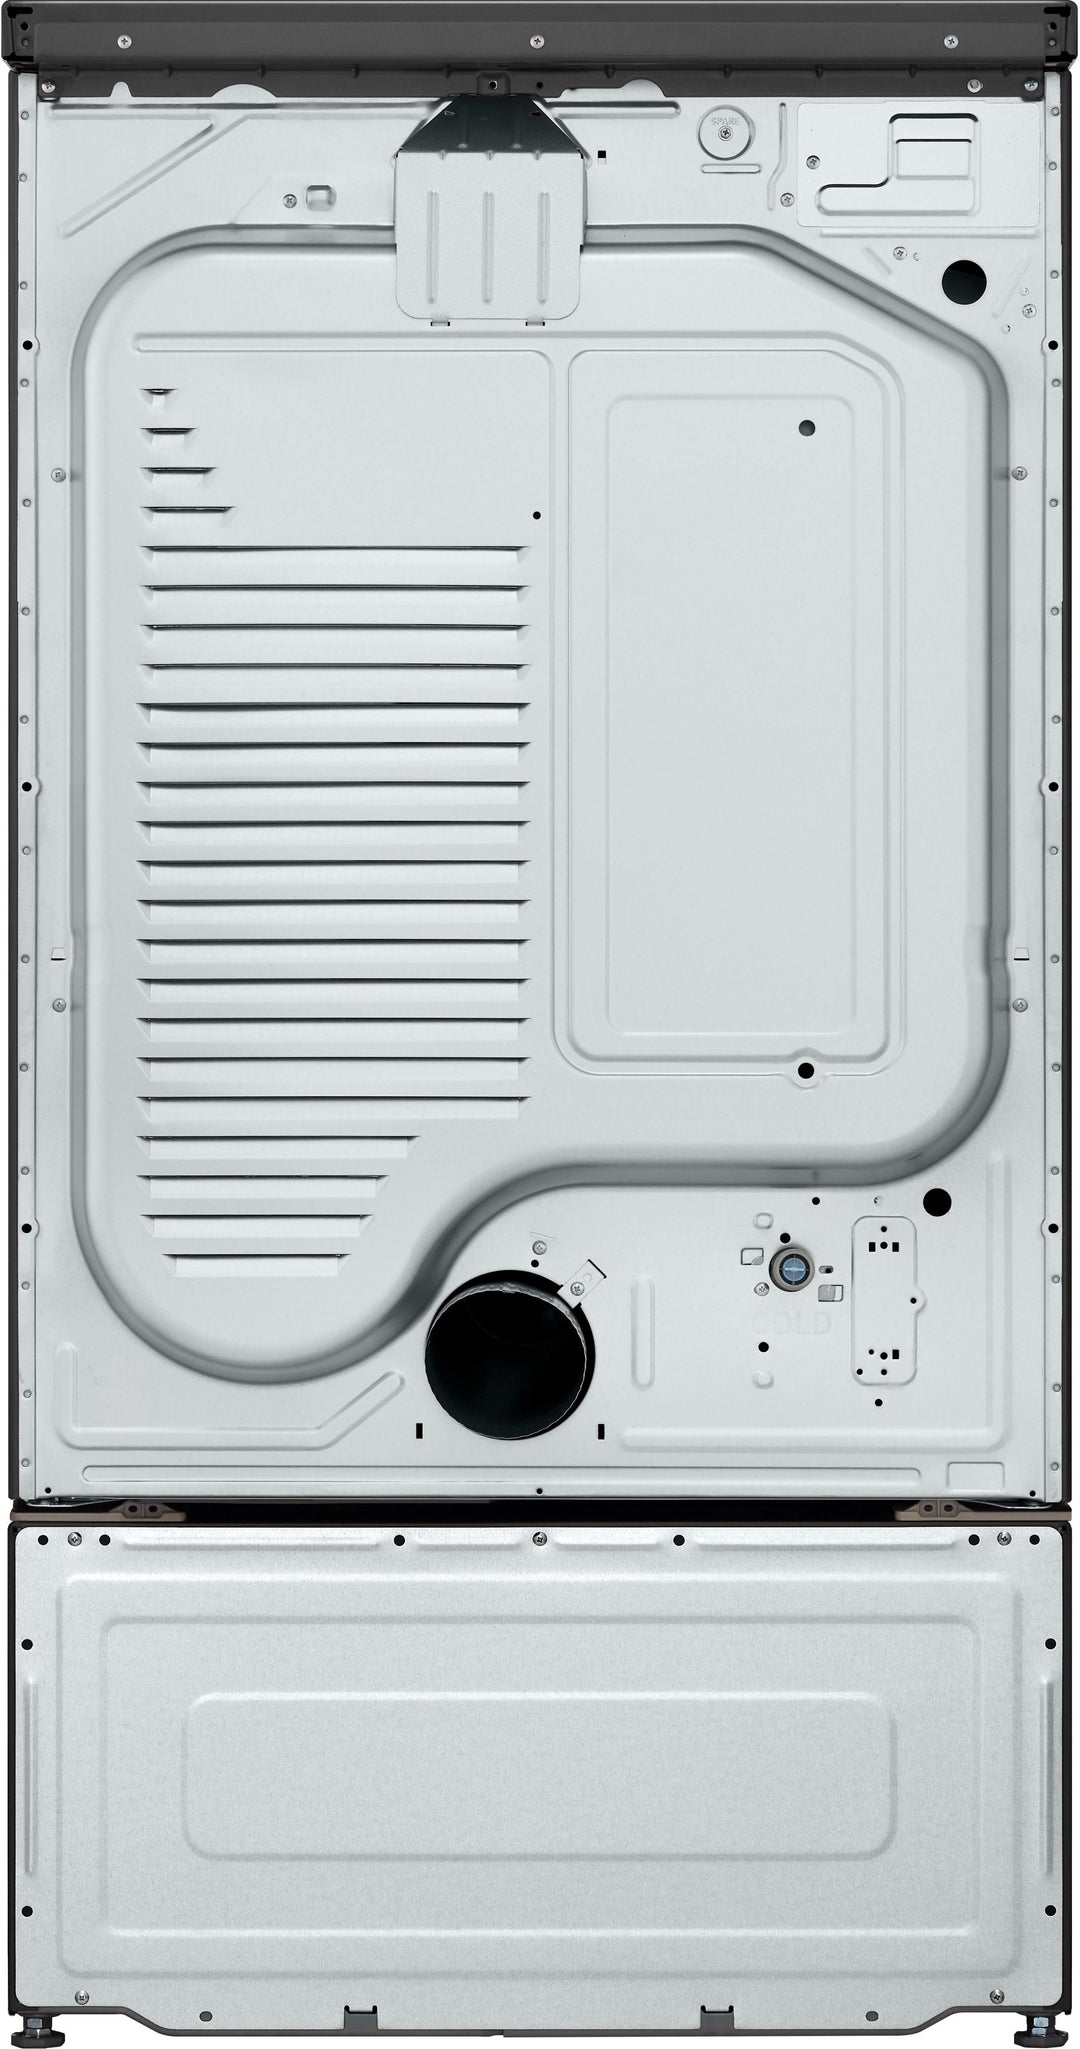 LG - 27" Laundry Pedestal with Storage Drawer - Black Steel_2